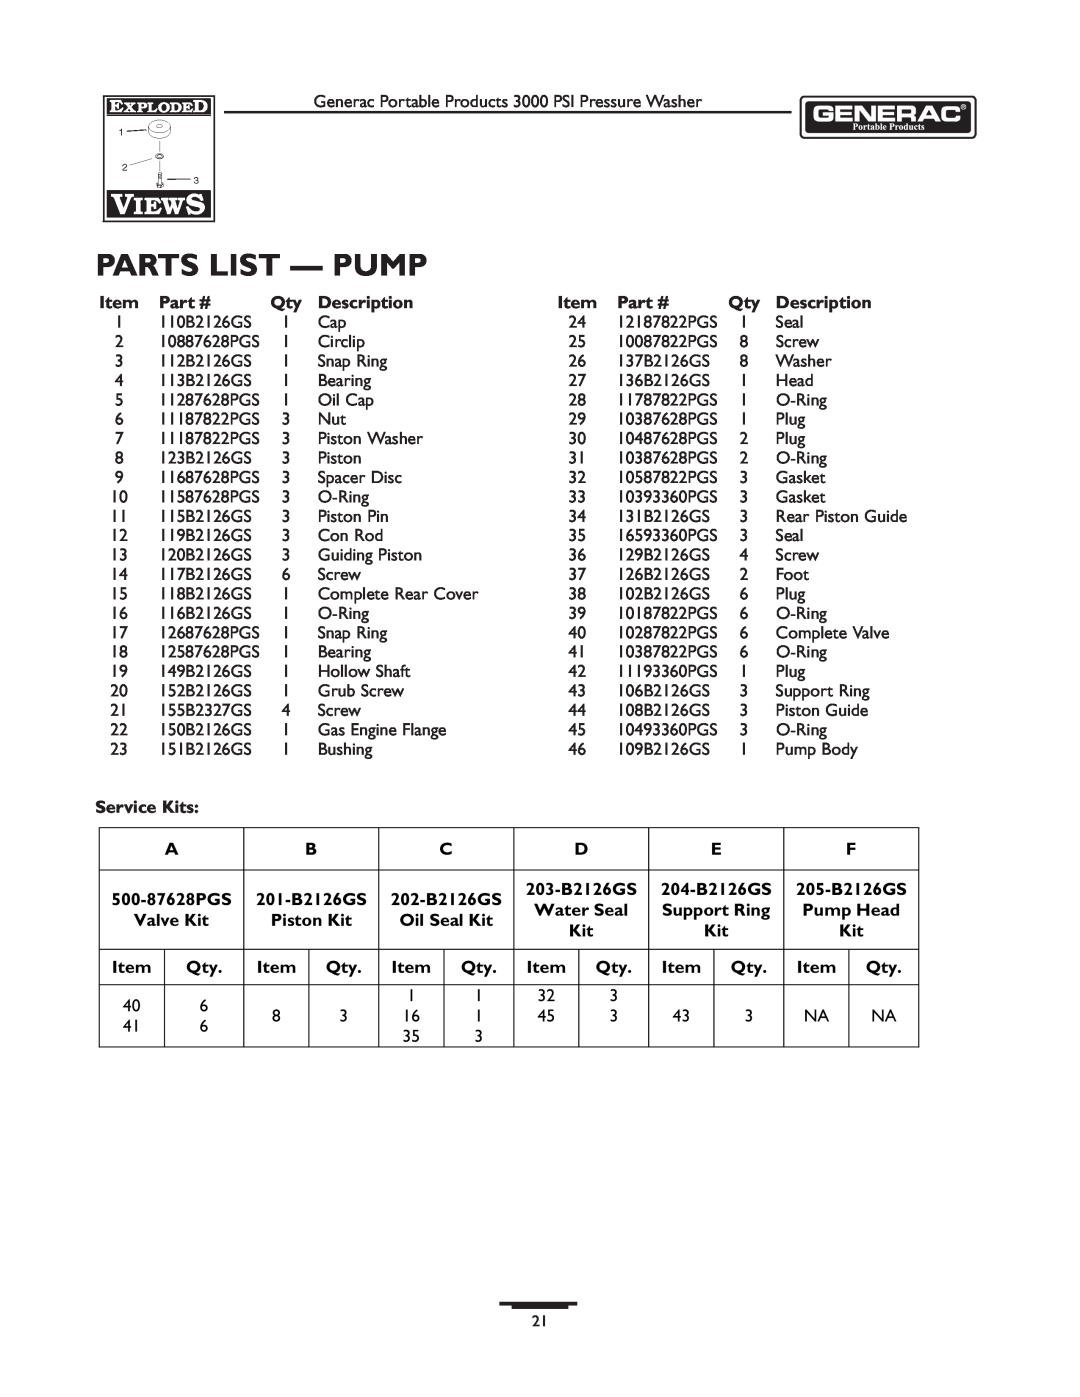 Briggs & Stratton 1418-2 Parts List - Pump, Description, Service Kits, 500-87628PGS, 201-B2126GS, 202-B2126GS, 203-B2126GS 